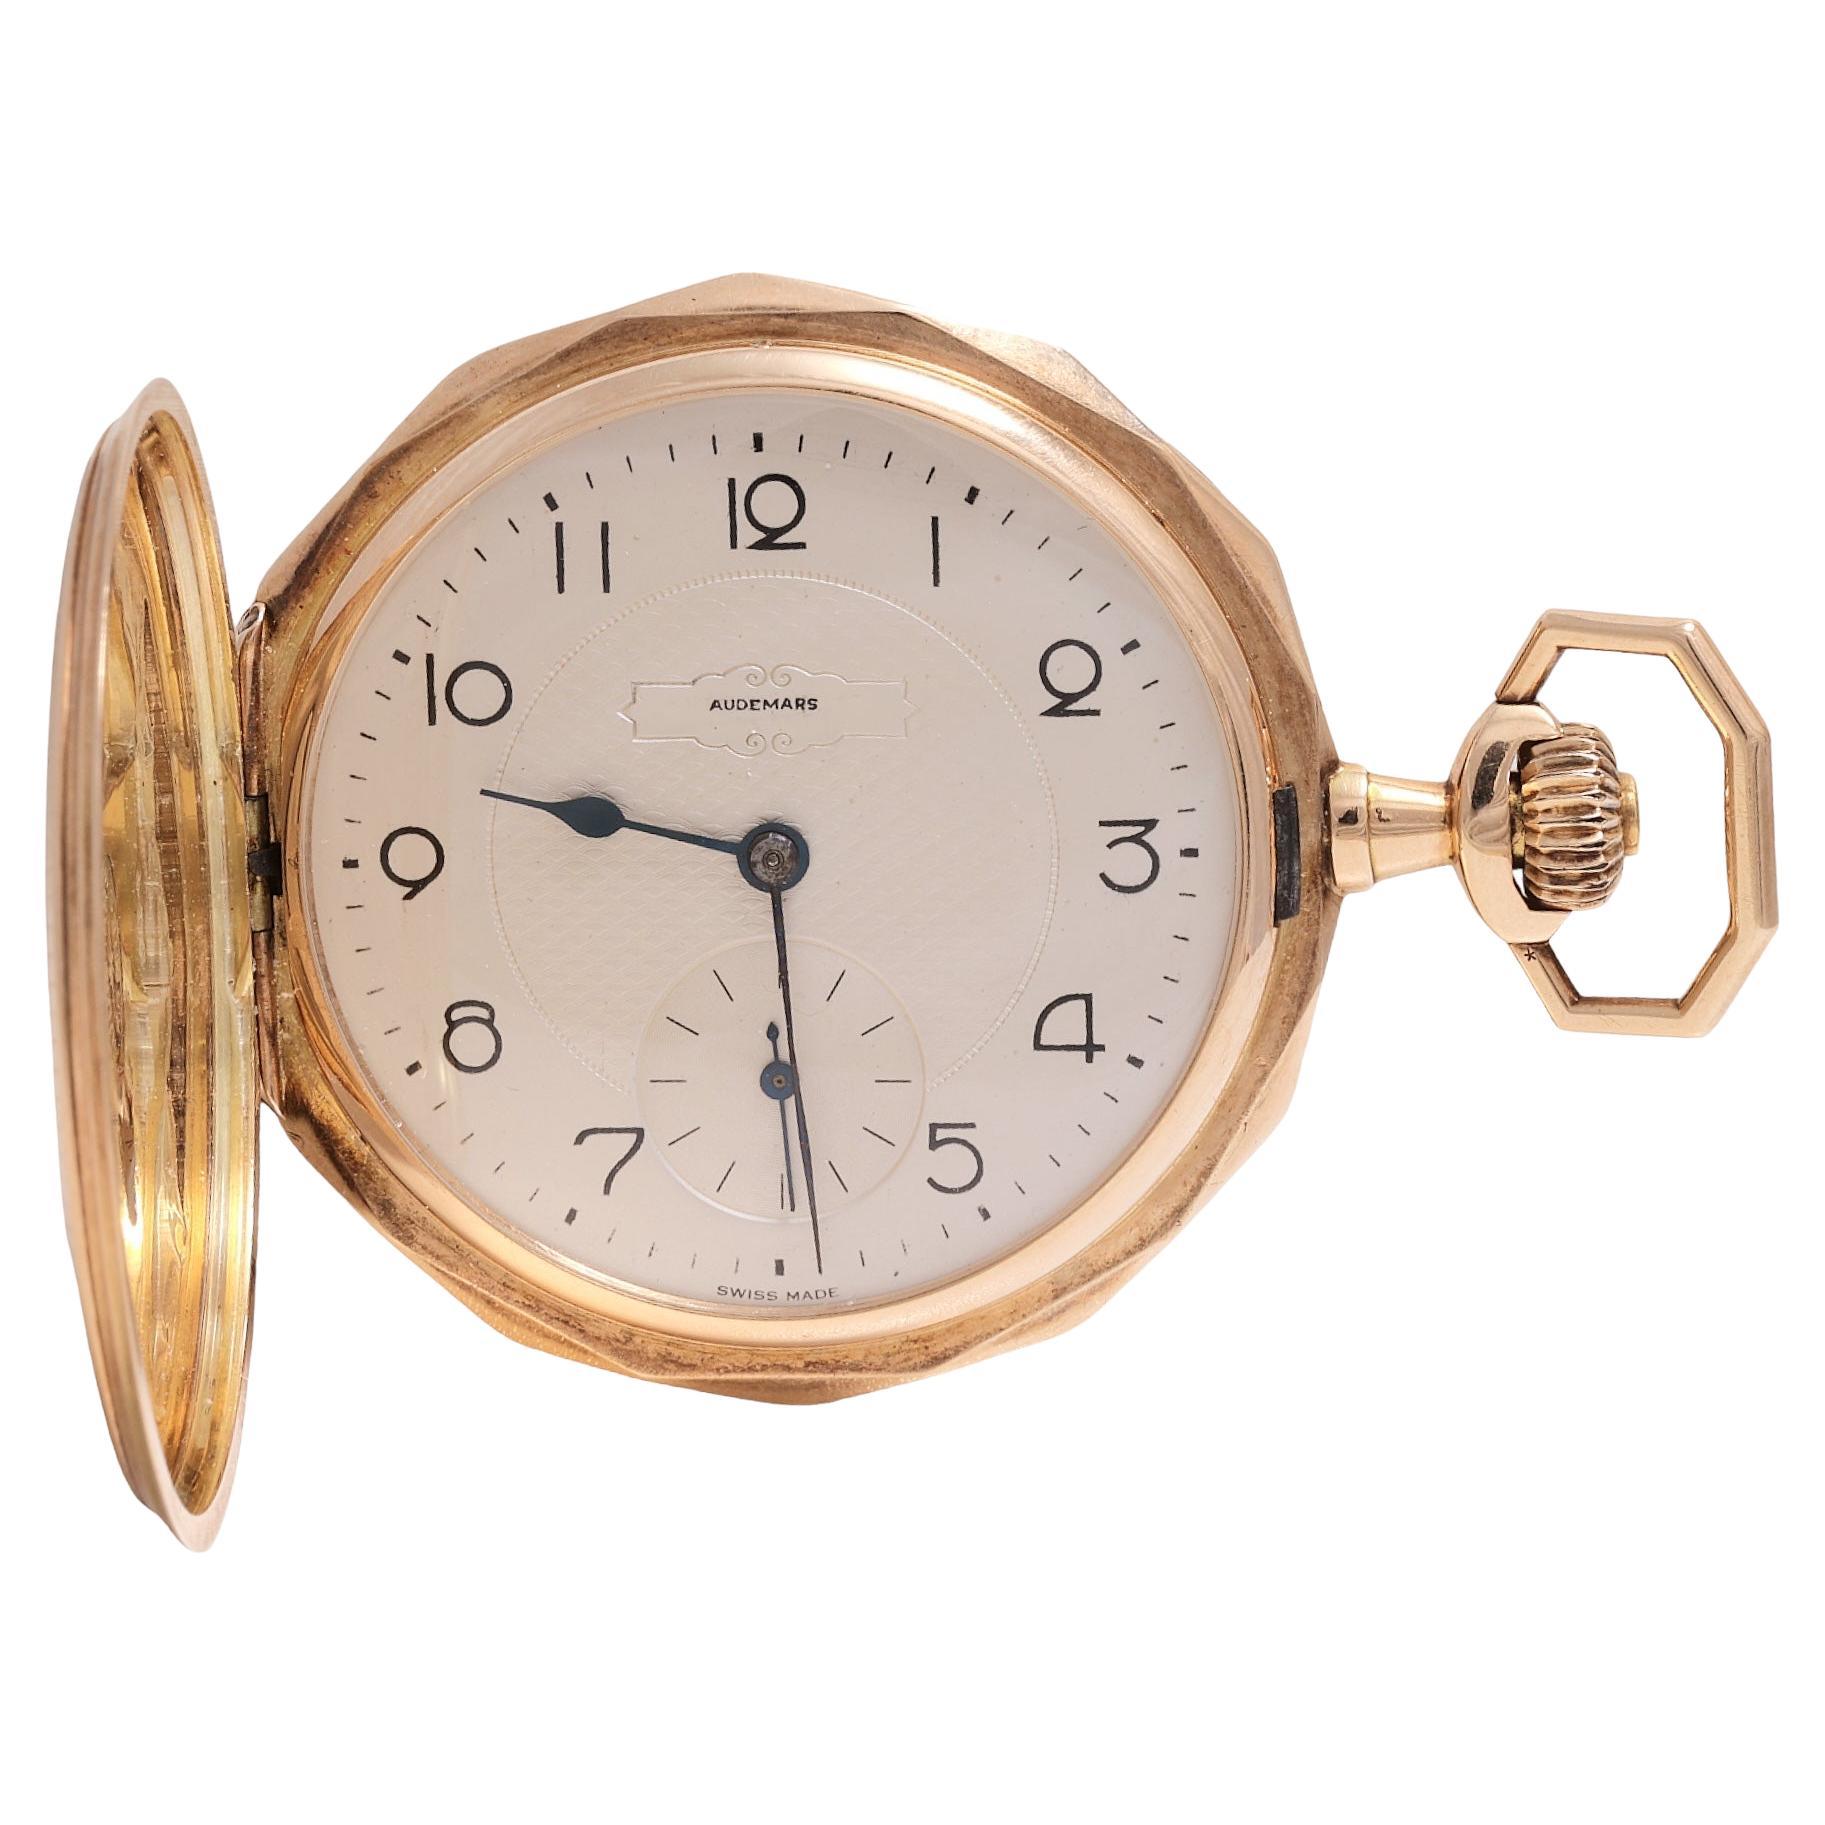 14 Kt Gold Audemars Frères Genève Pocket Watch, before Audemars Piguet founded For Sale